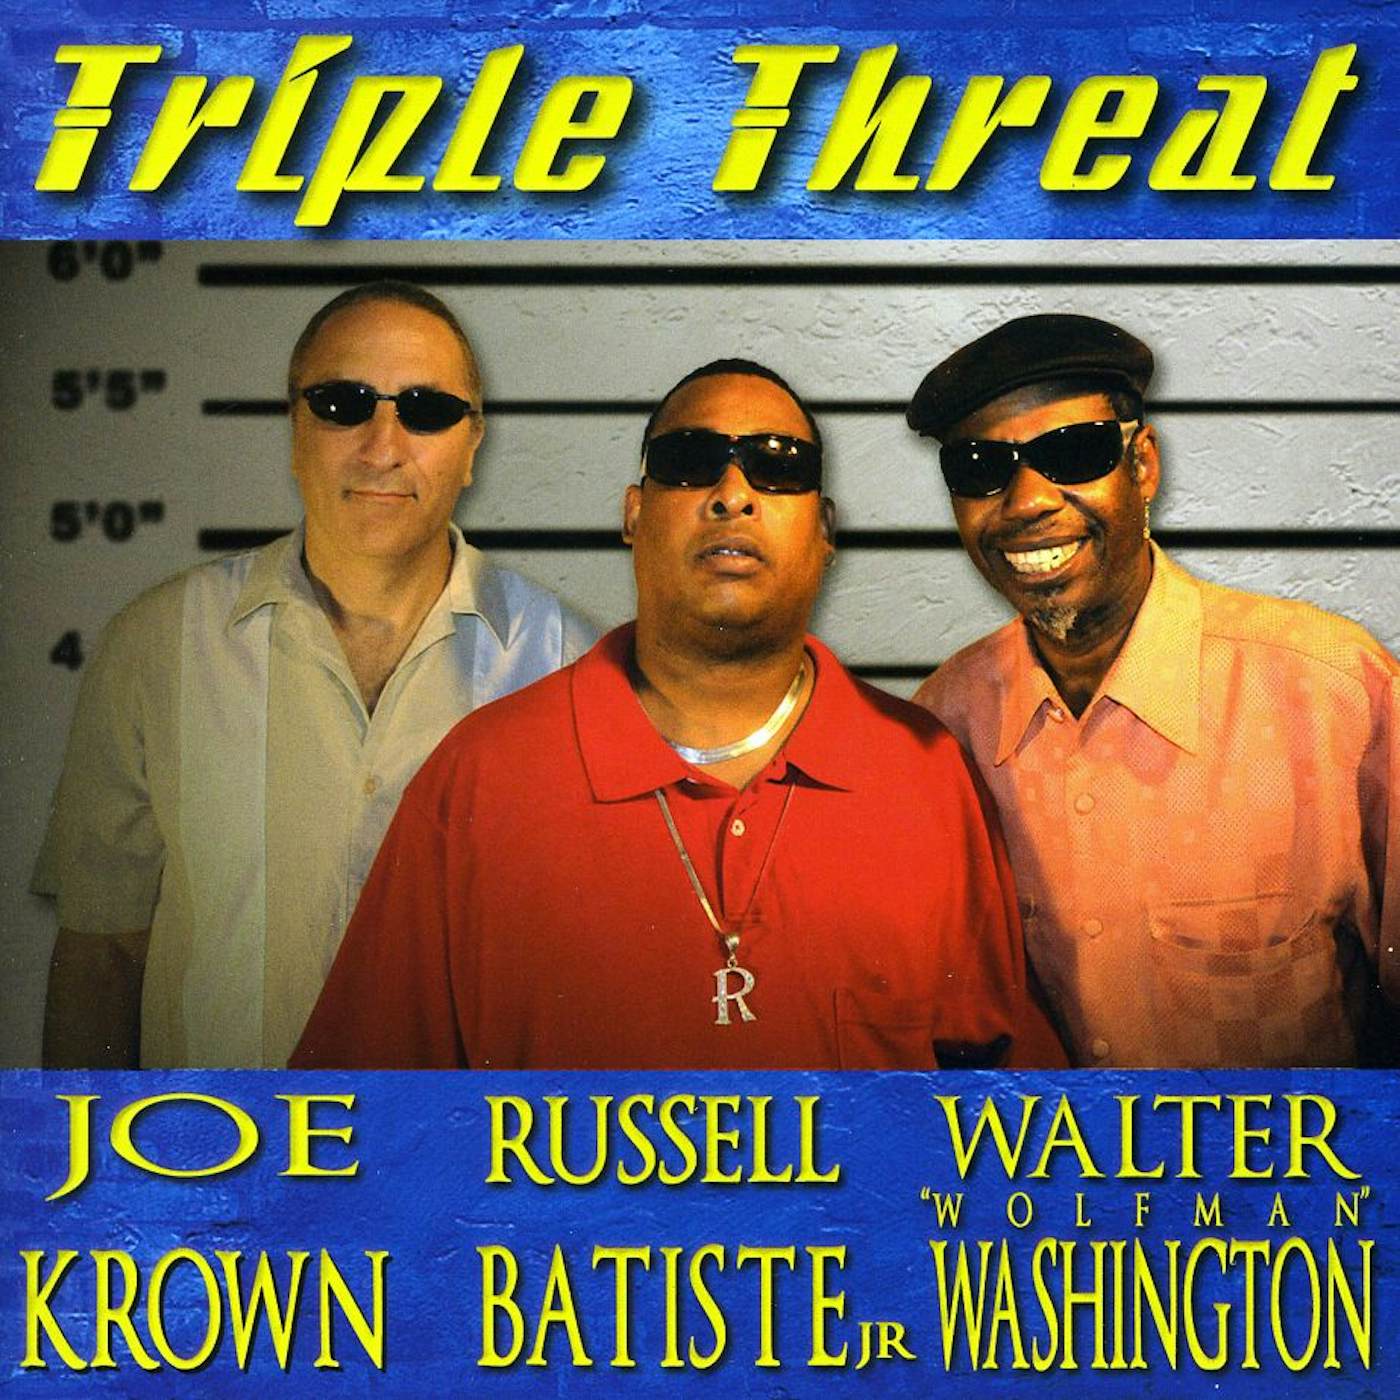 Joe Krown TRIPLE THREAT CD